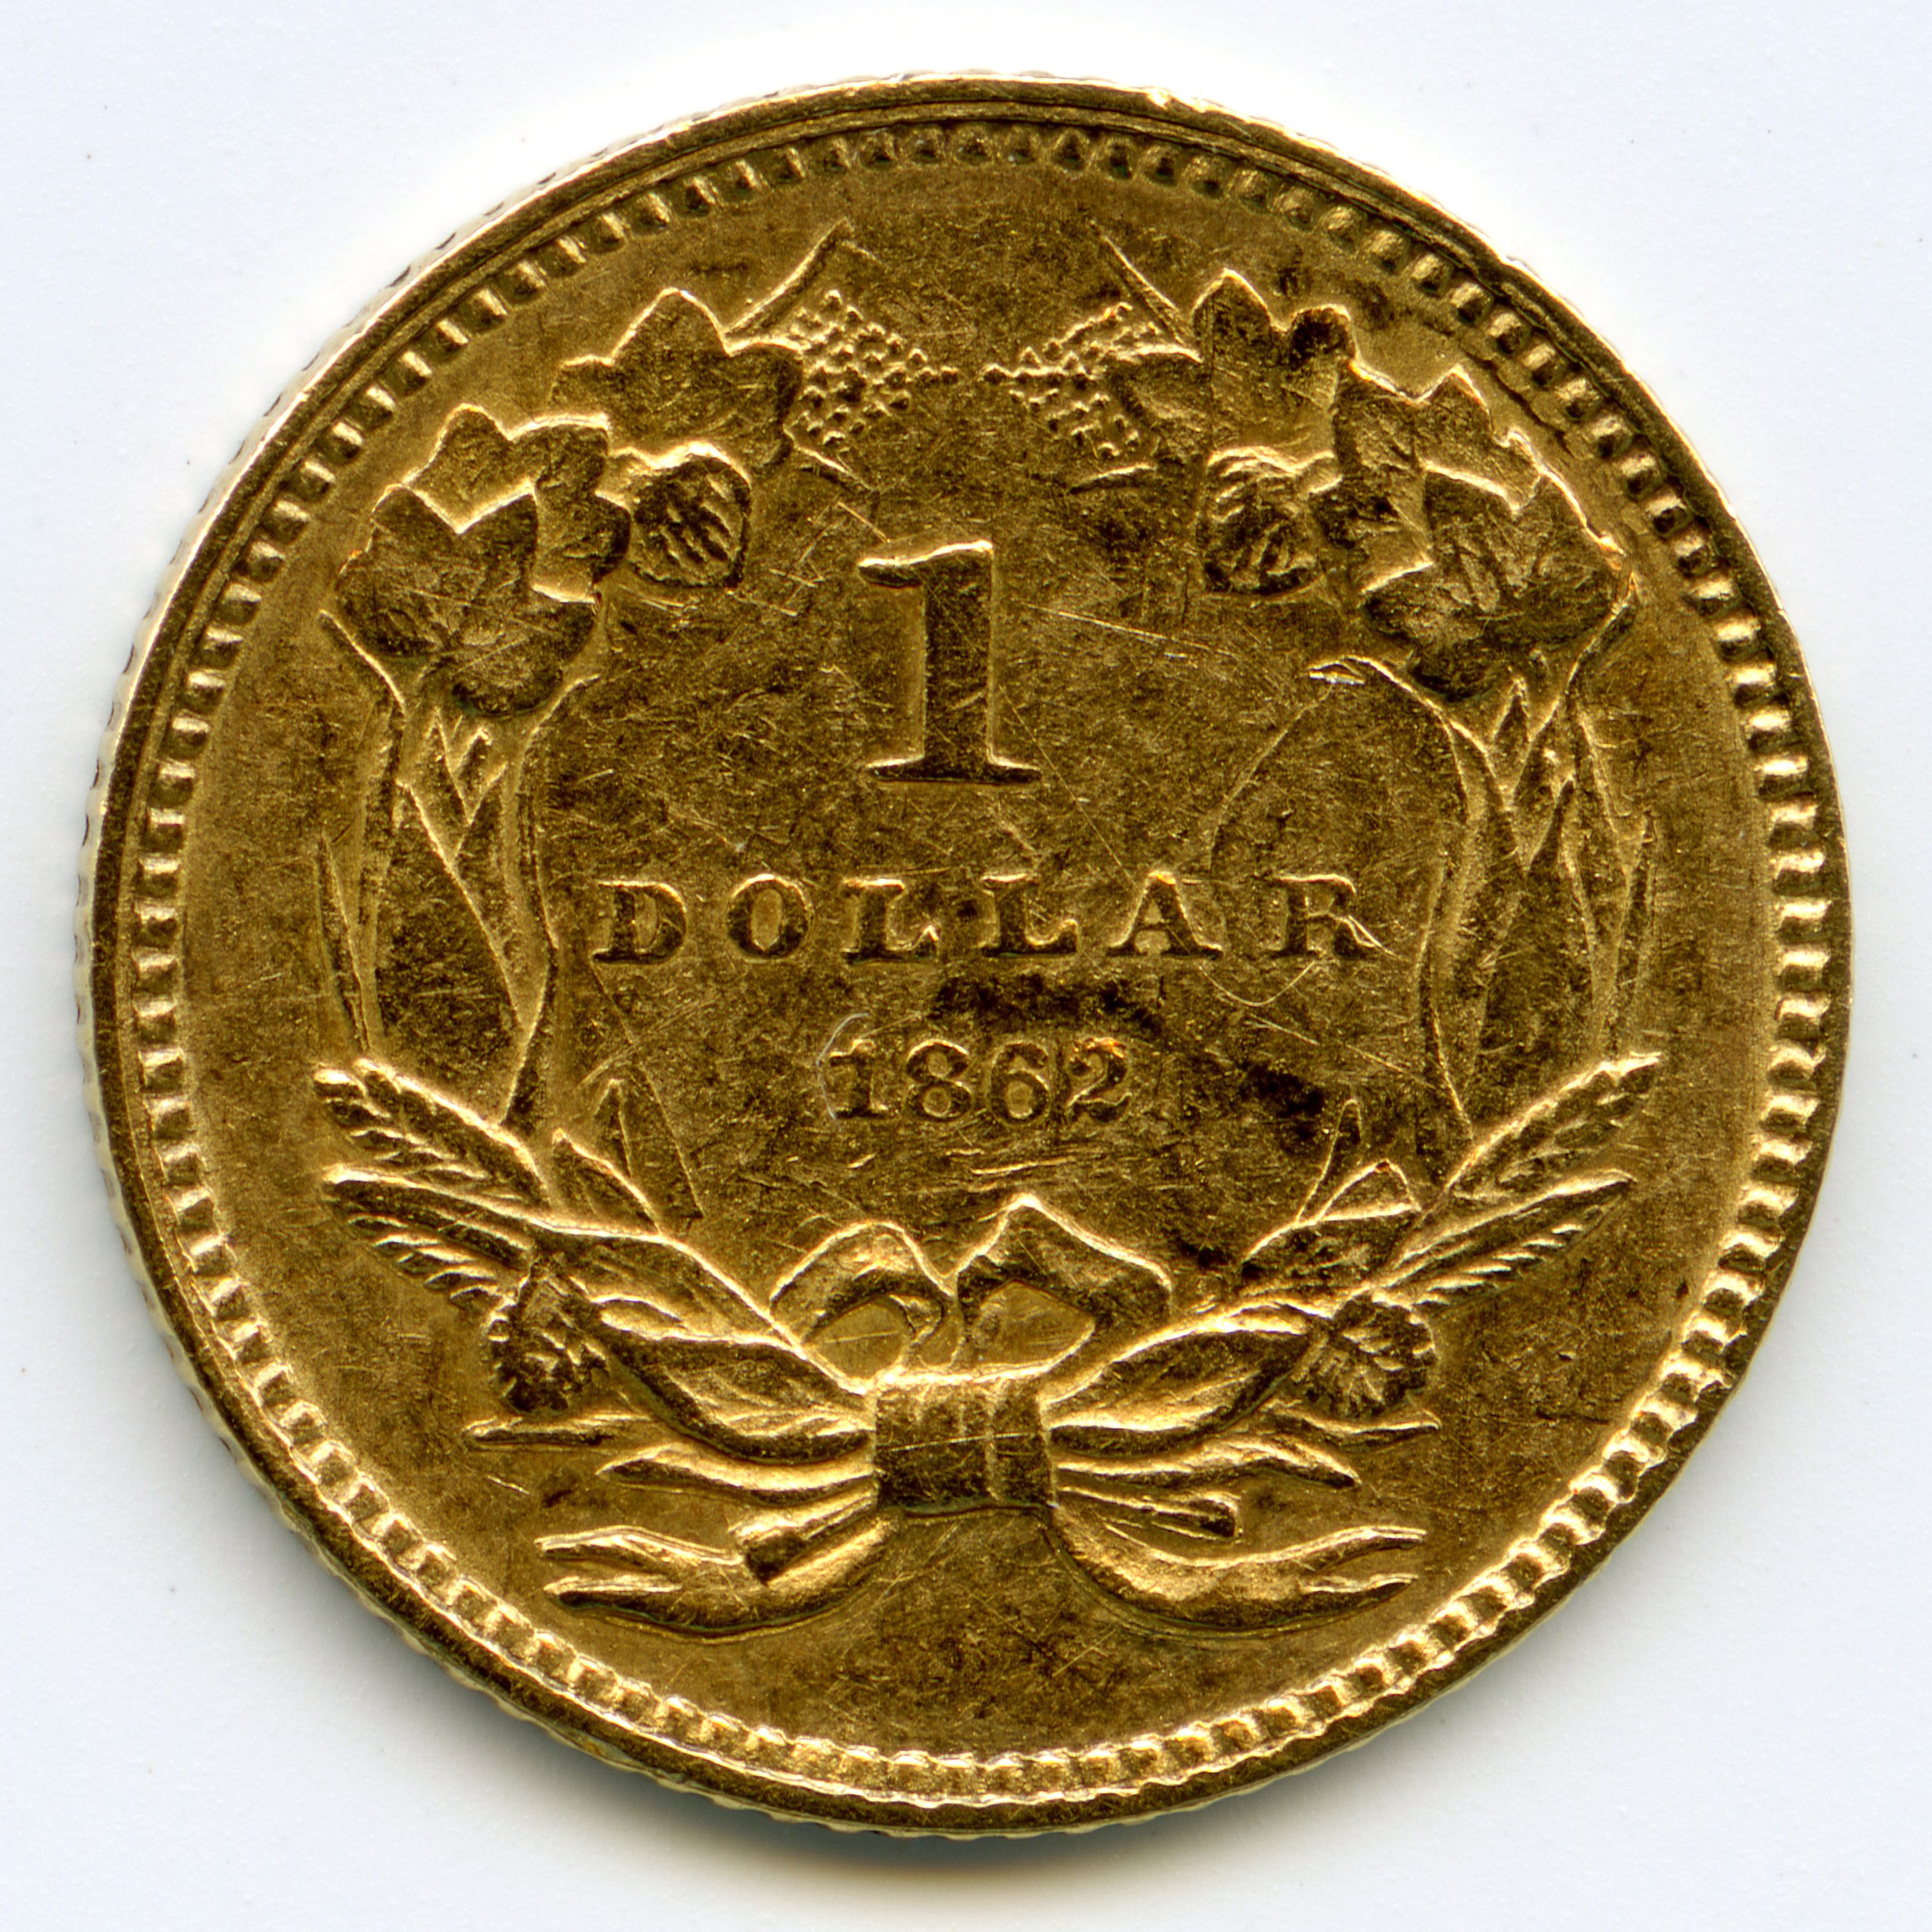 USA - 1 Dollar - 1862 revers